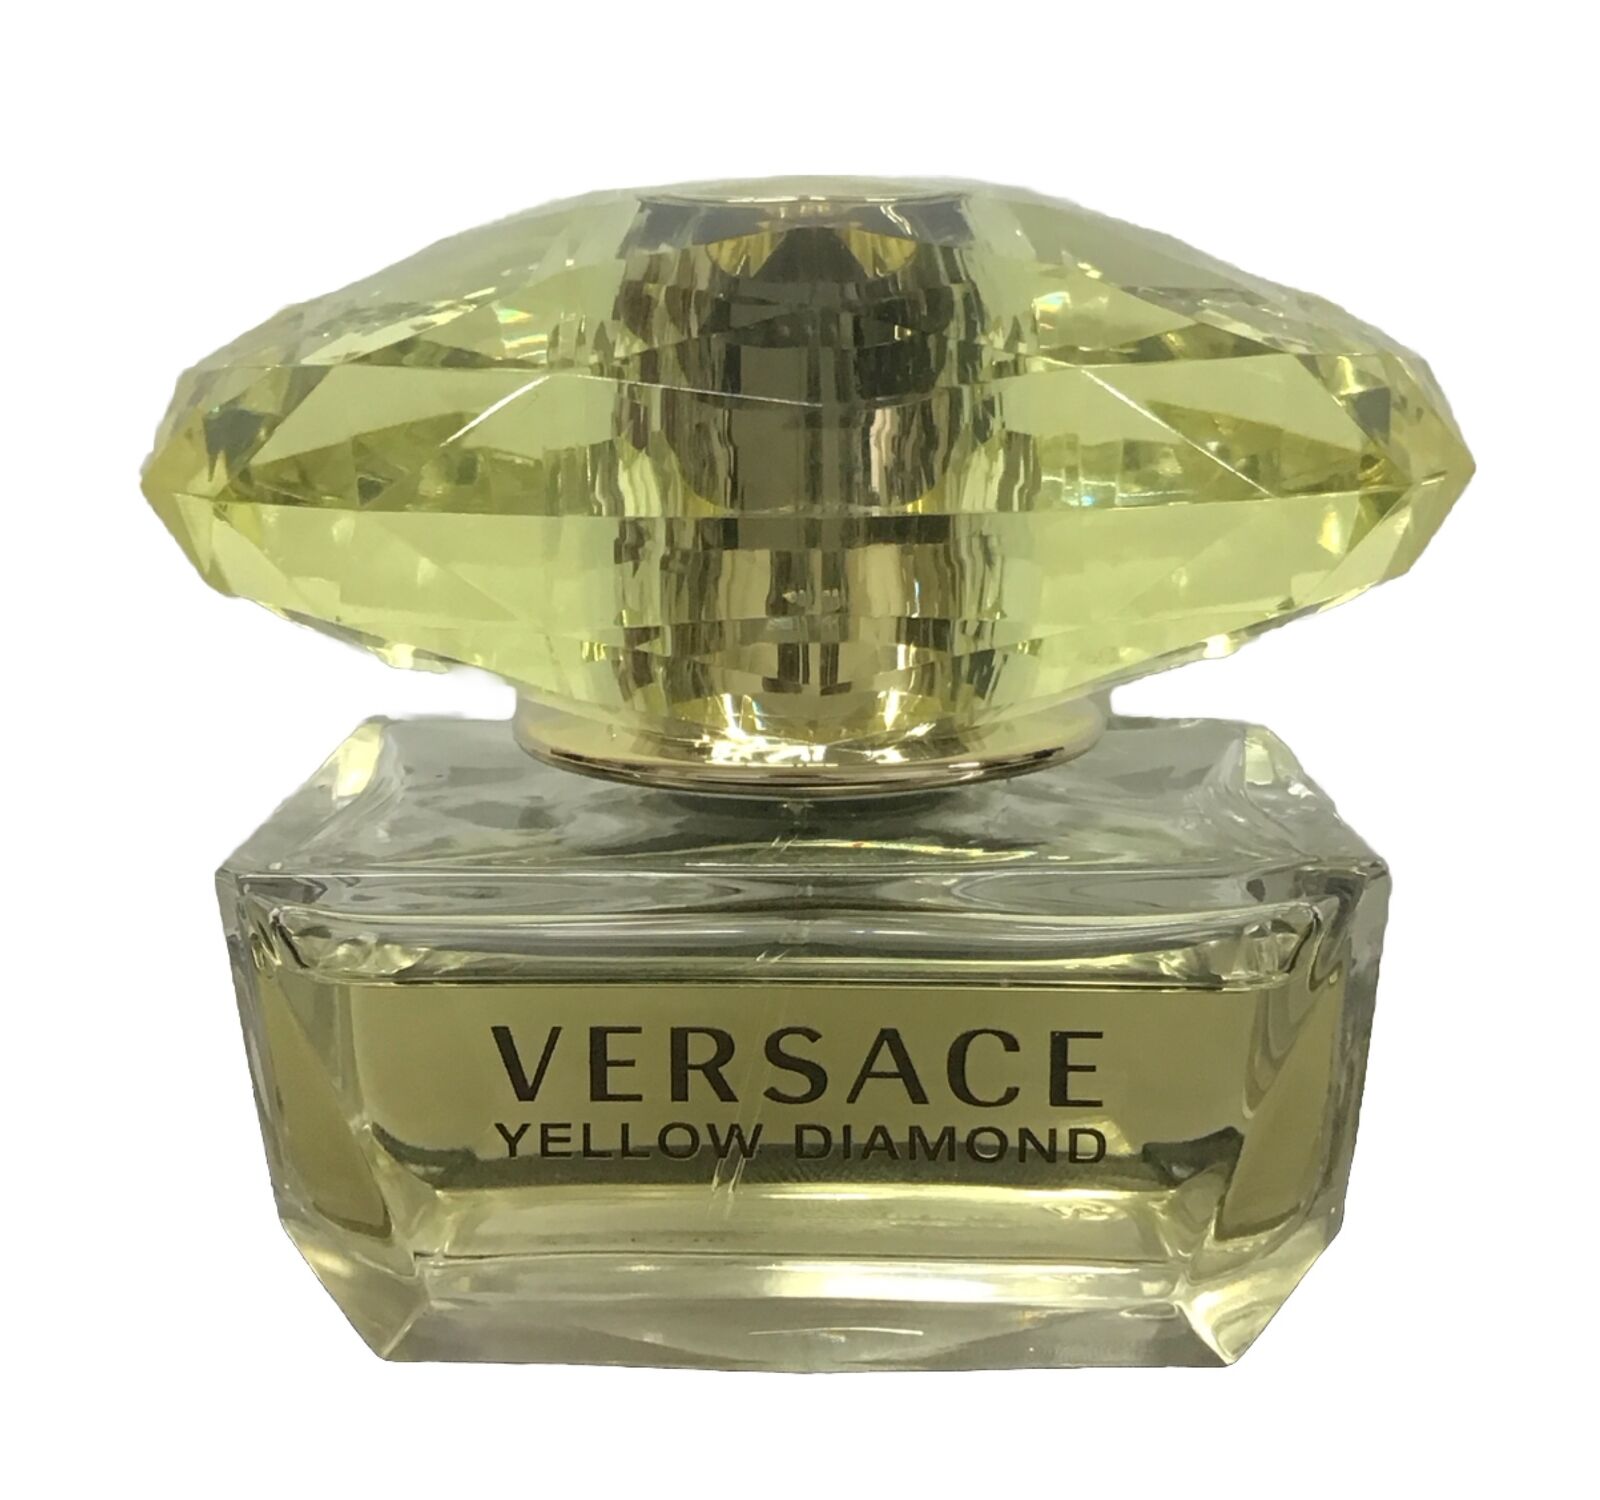 Versace Yellow Diamond Eau De Toilette Spray 1.7 Oz, As Pictured, No Box 90%Full